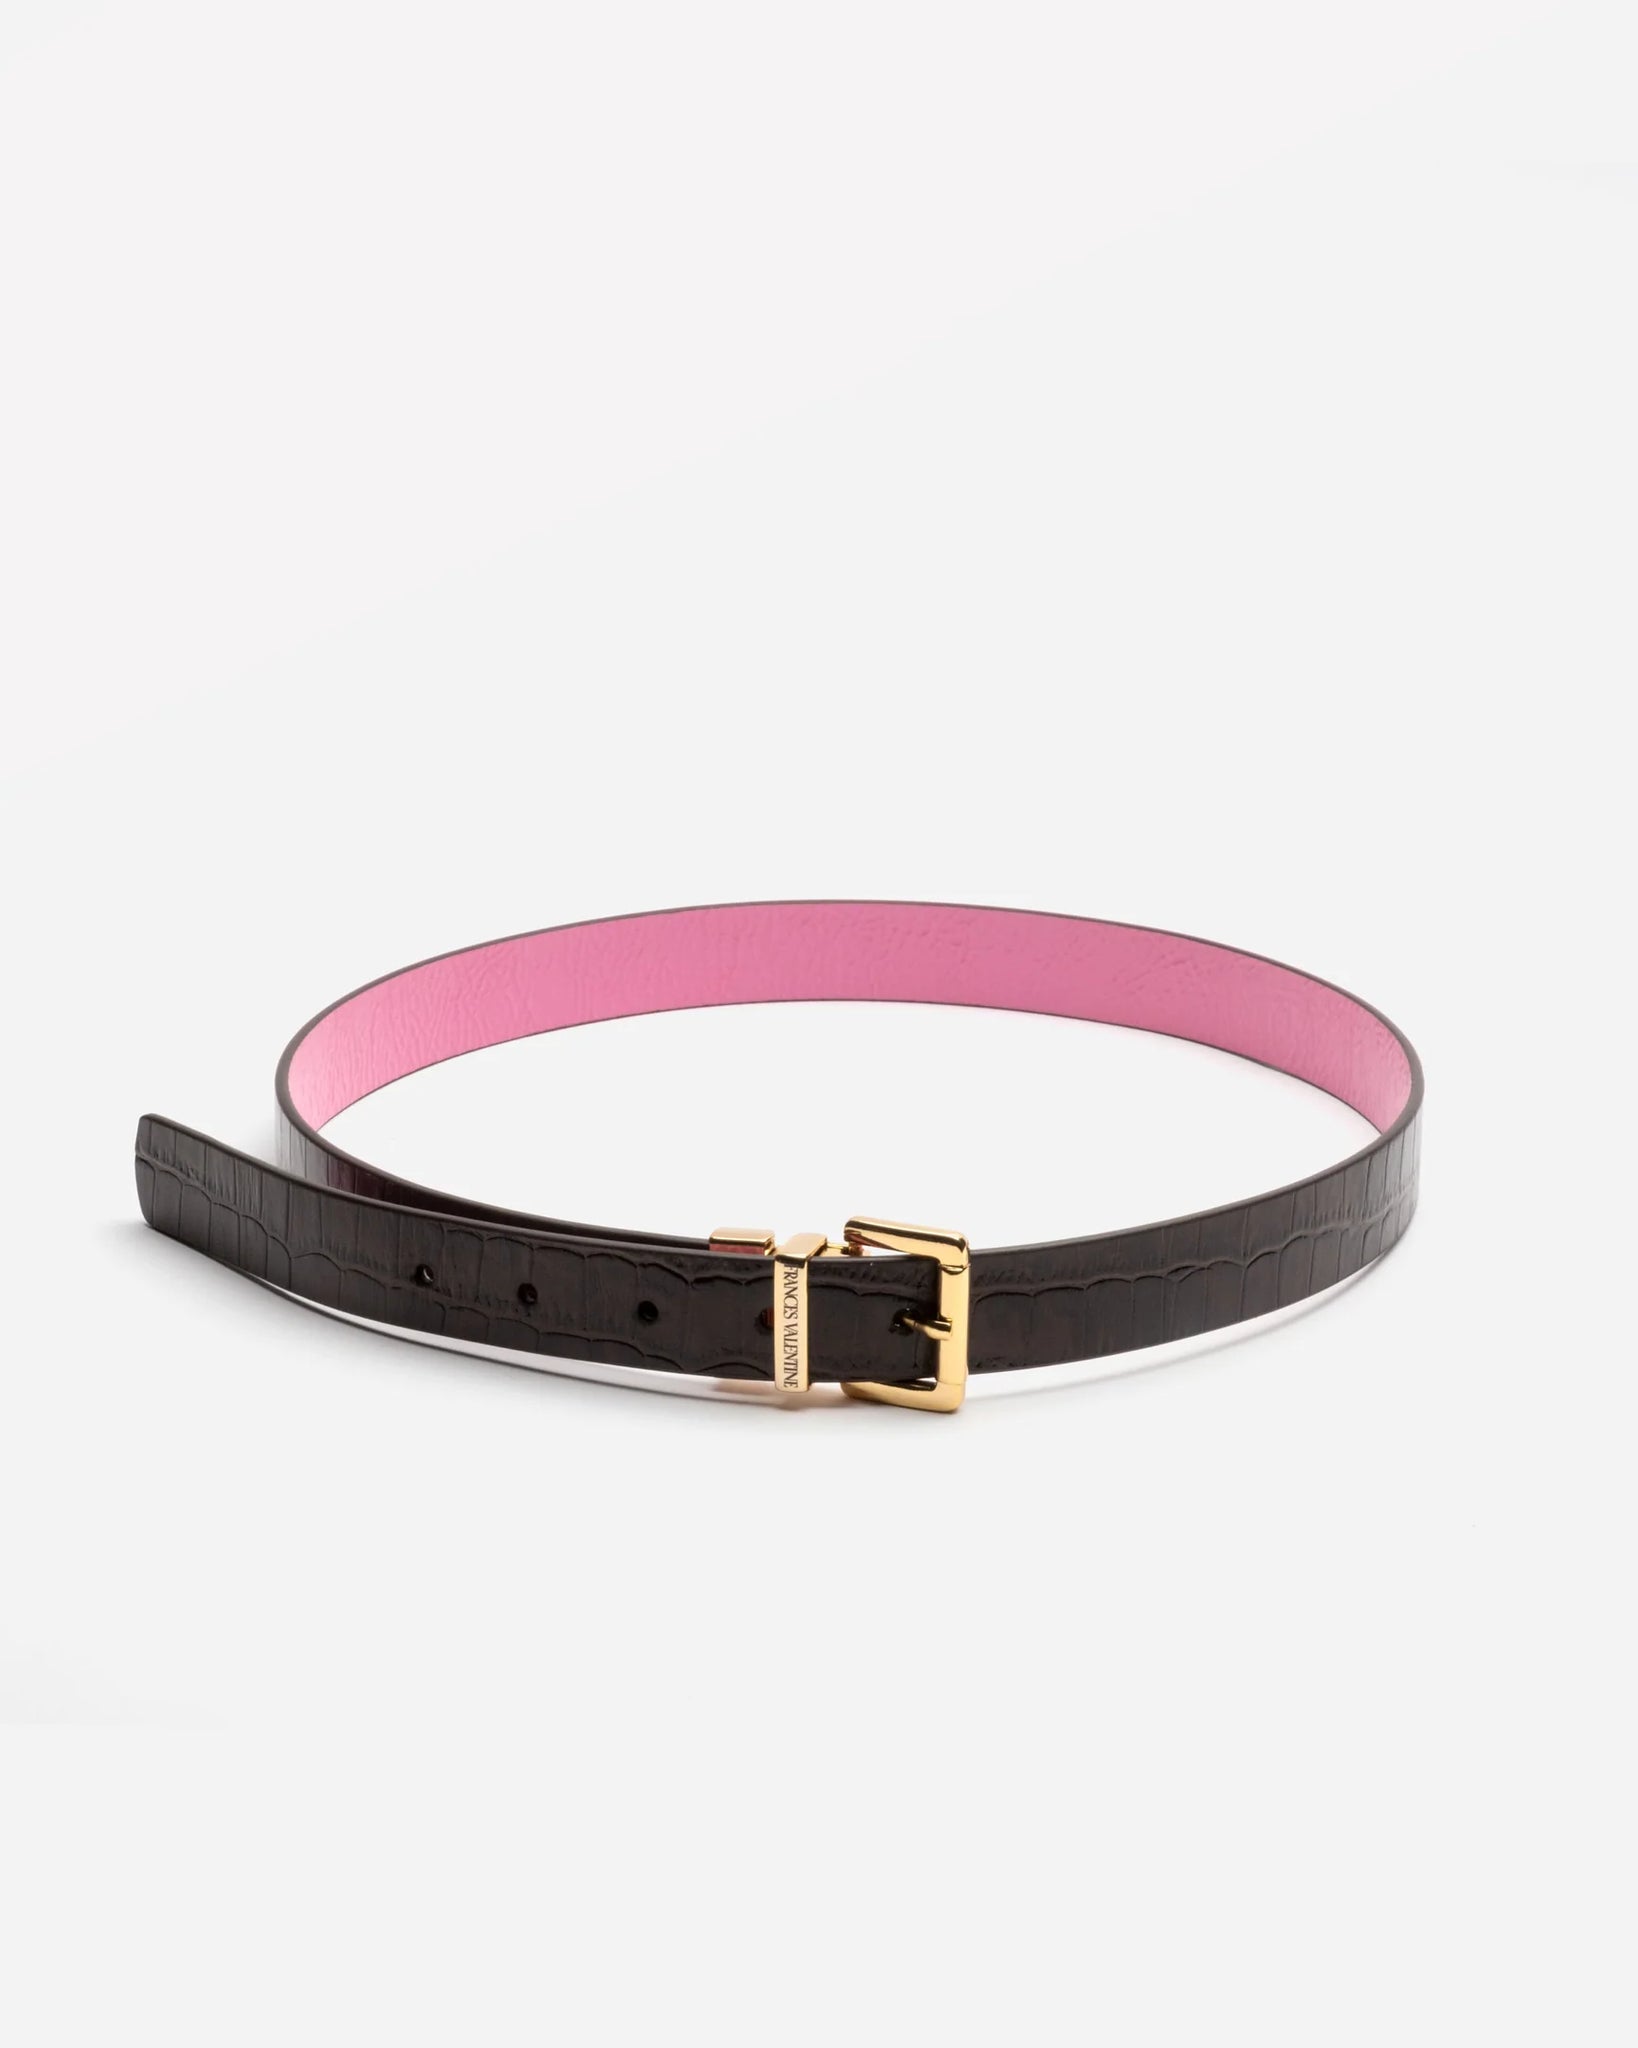 Frances Valentine Square Buckle Belt - Chocolate/Pink